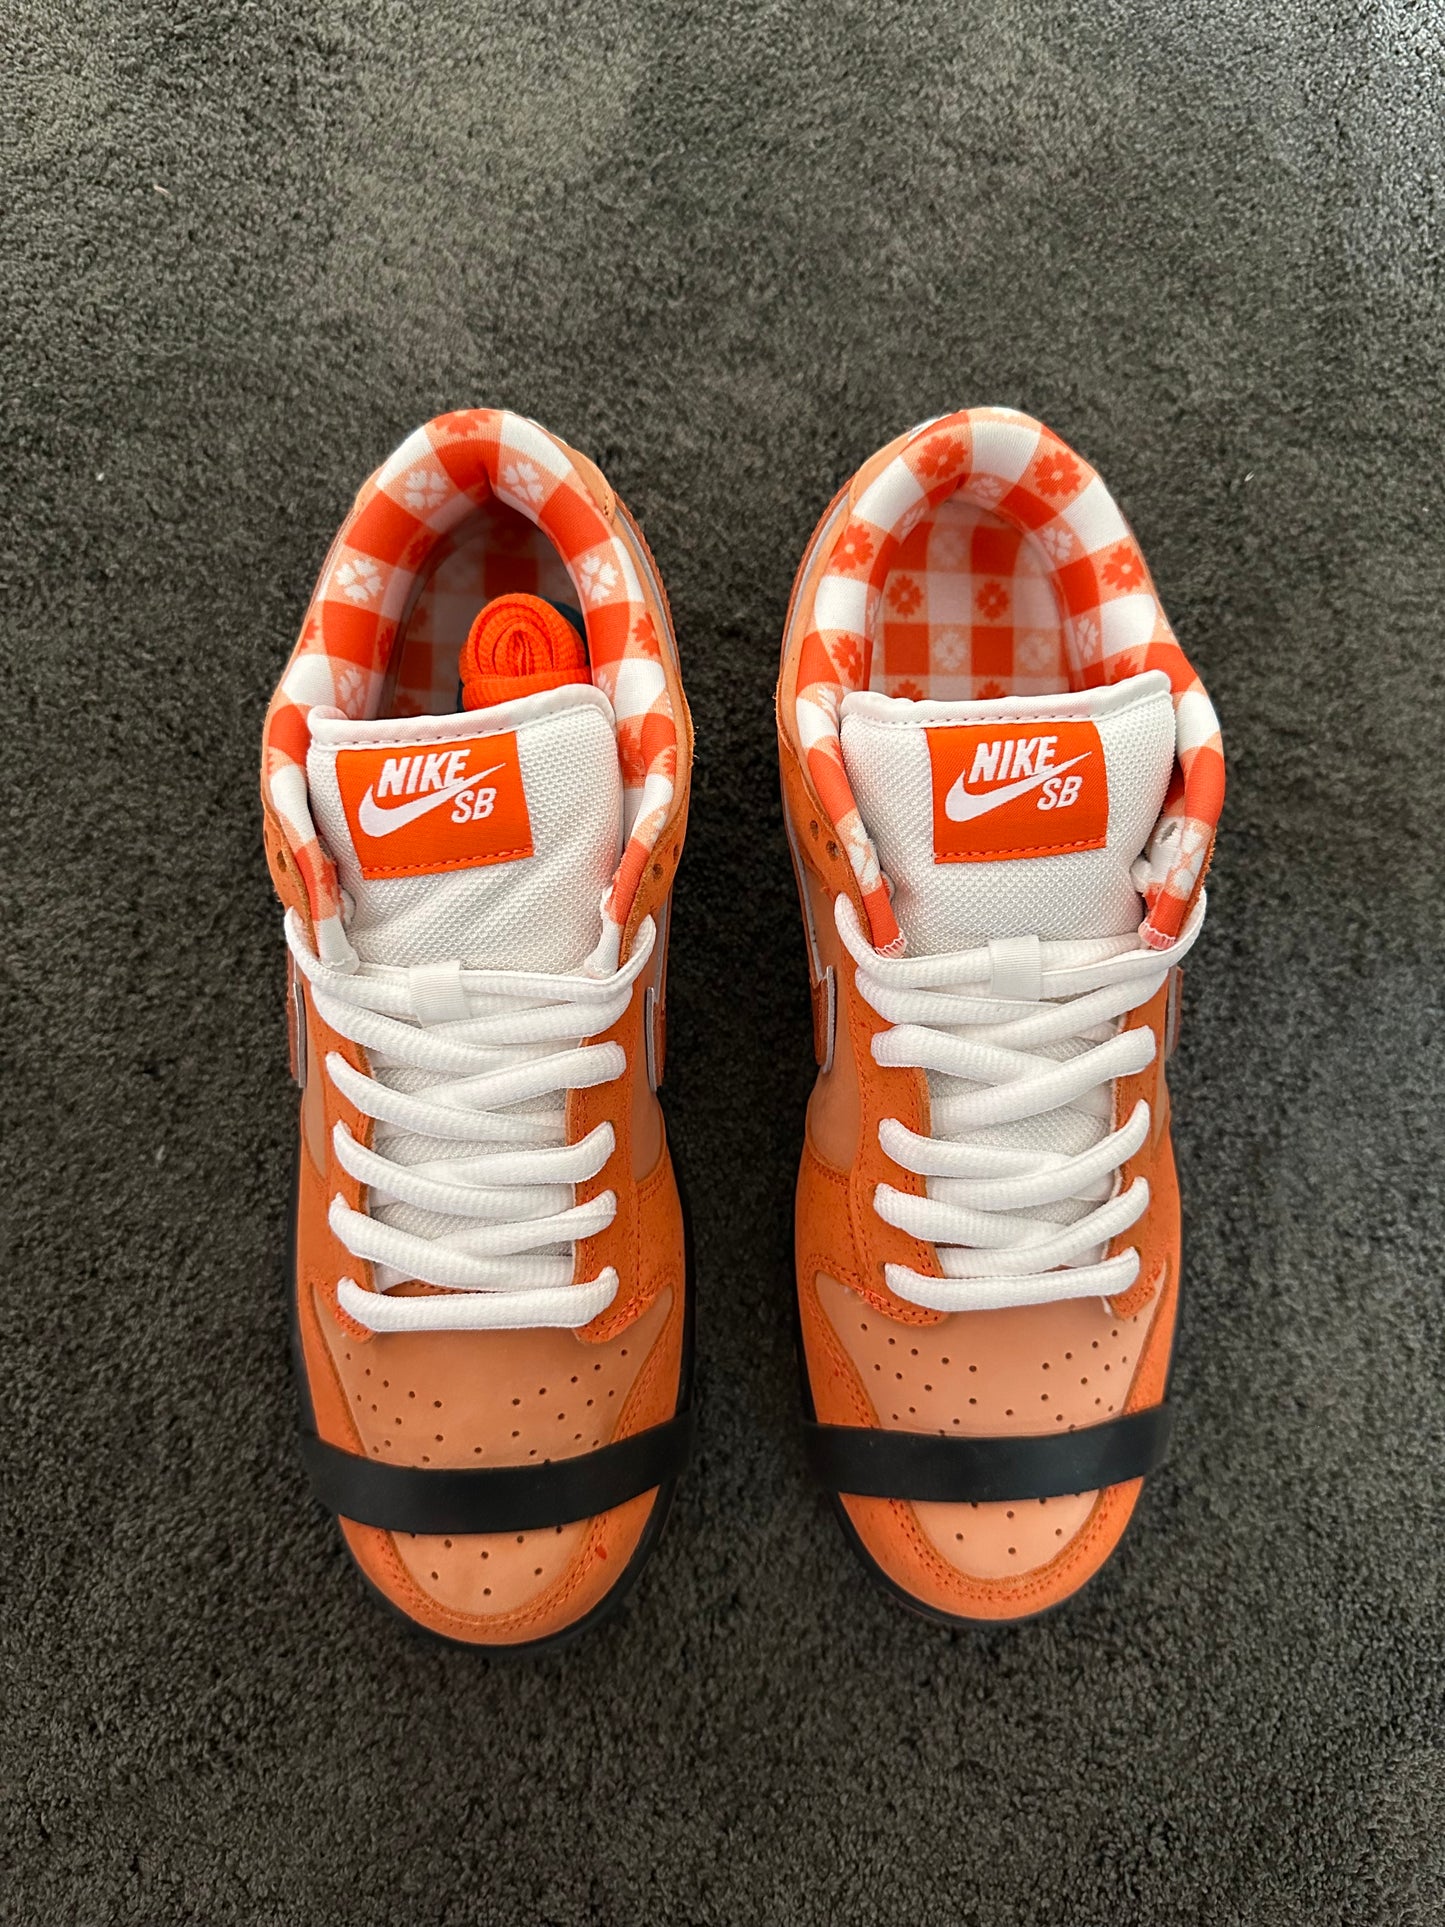 Nike Dunk SB - Orange Lobster